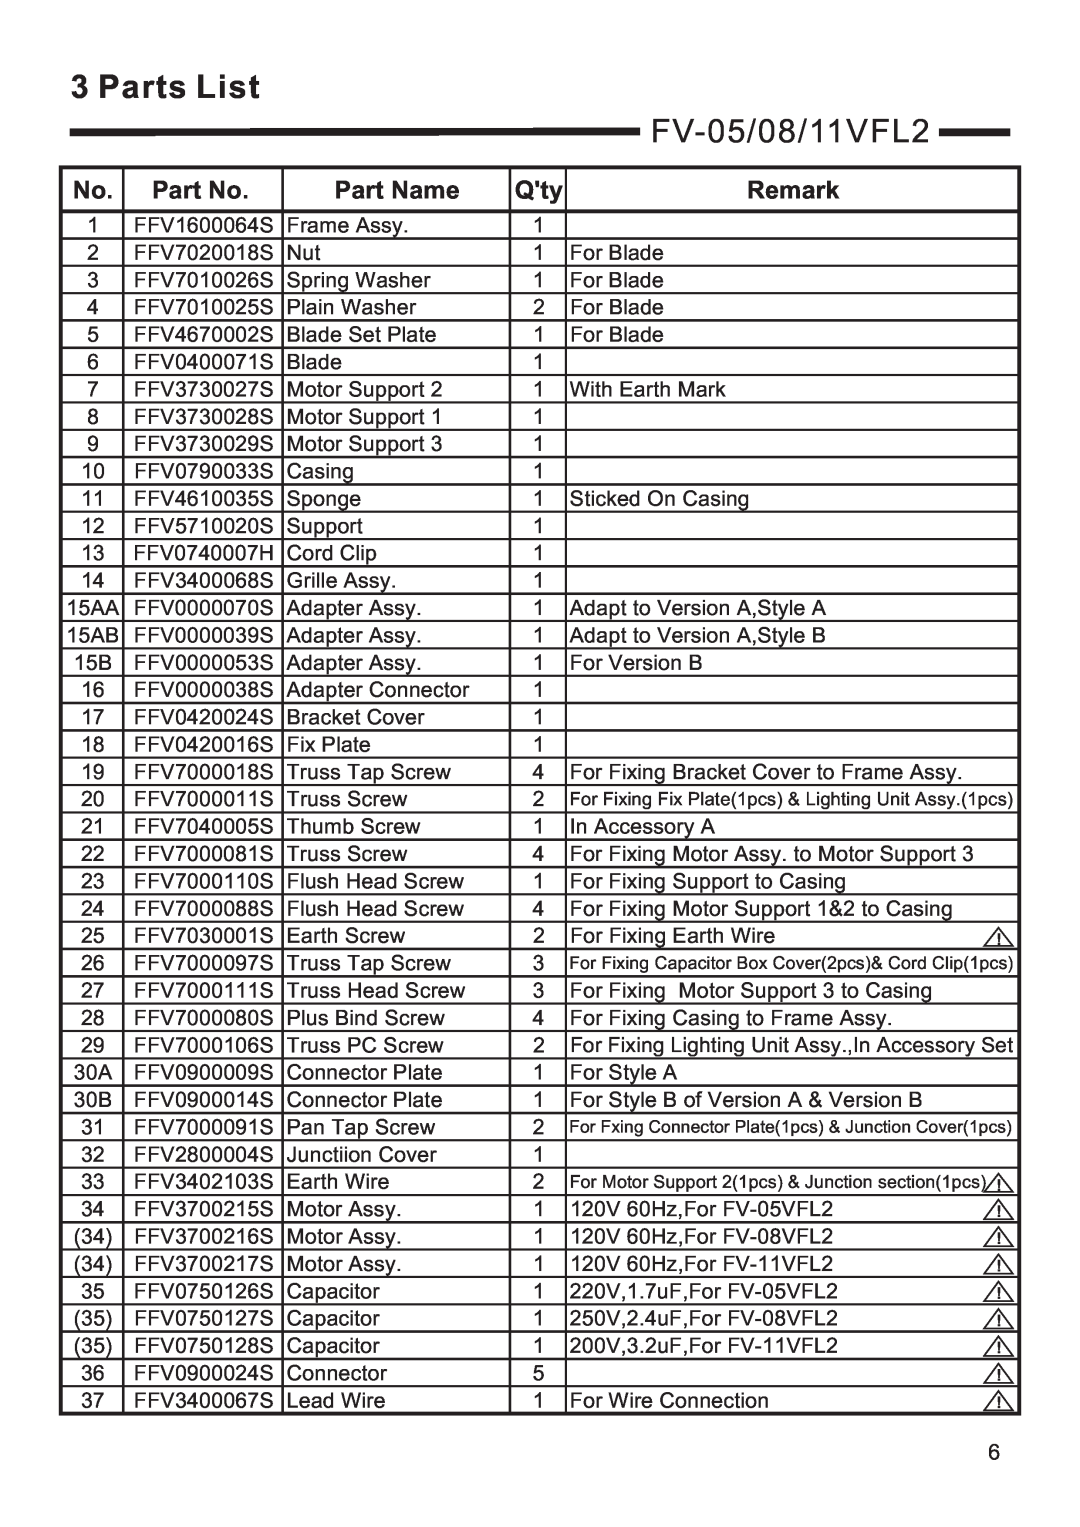 Panasonic FV-05/08/11VFL2 service manual Parts List, Part Name, Remark 